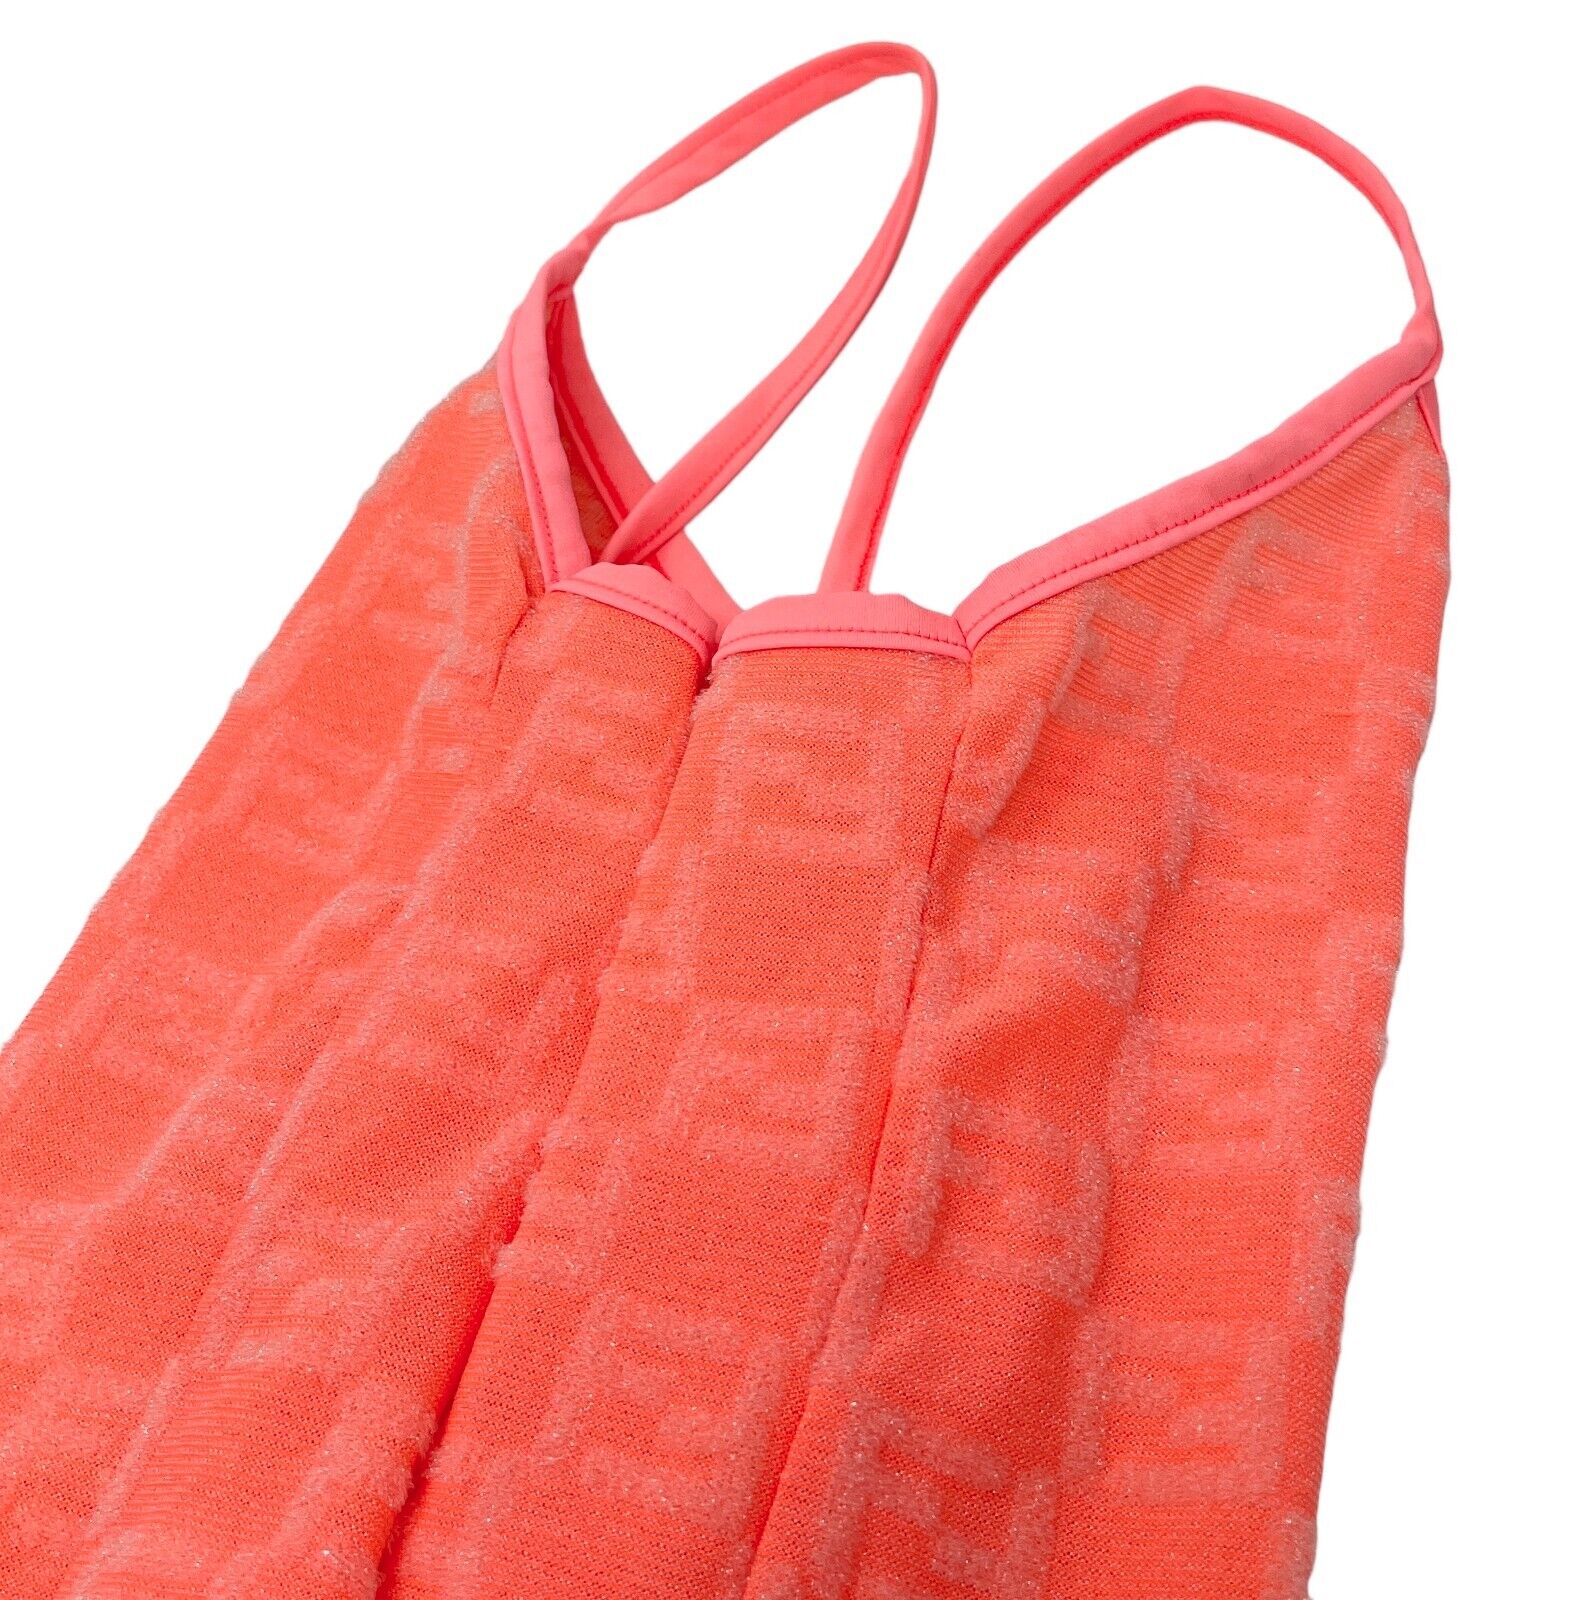 FENDI Vintage Zucchino Monogram Camisole Skirt Set Terrycloth Pink Nylon RankAB